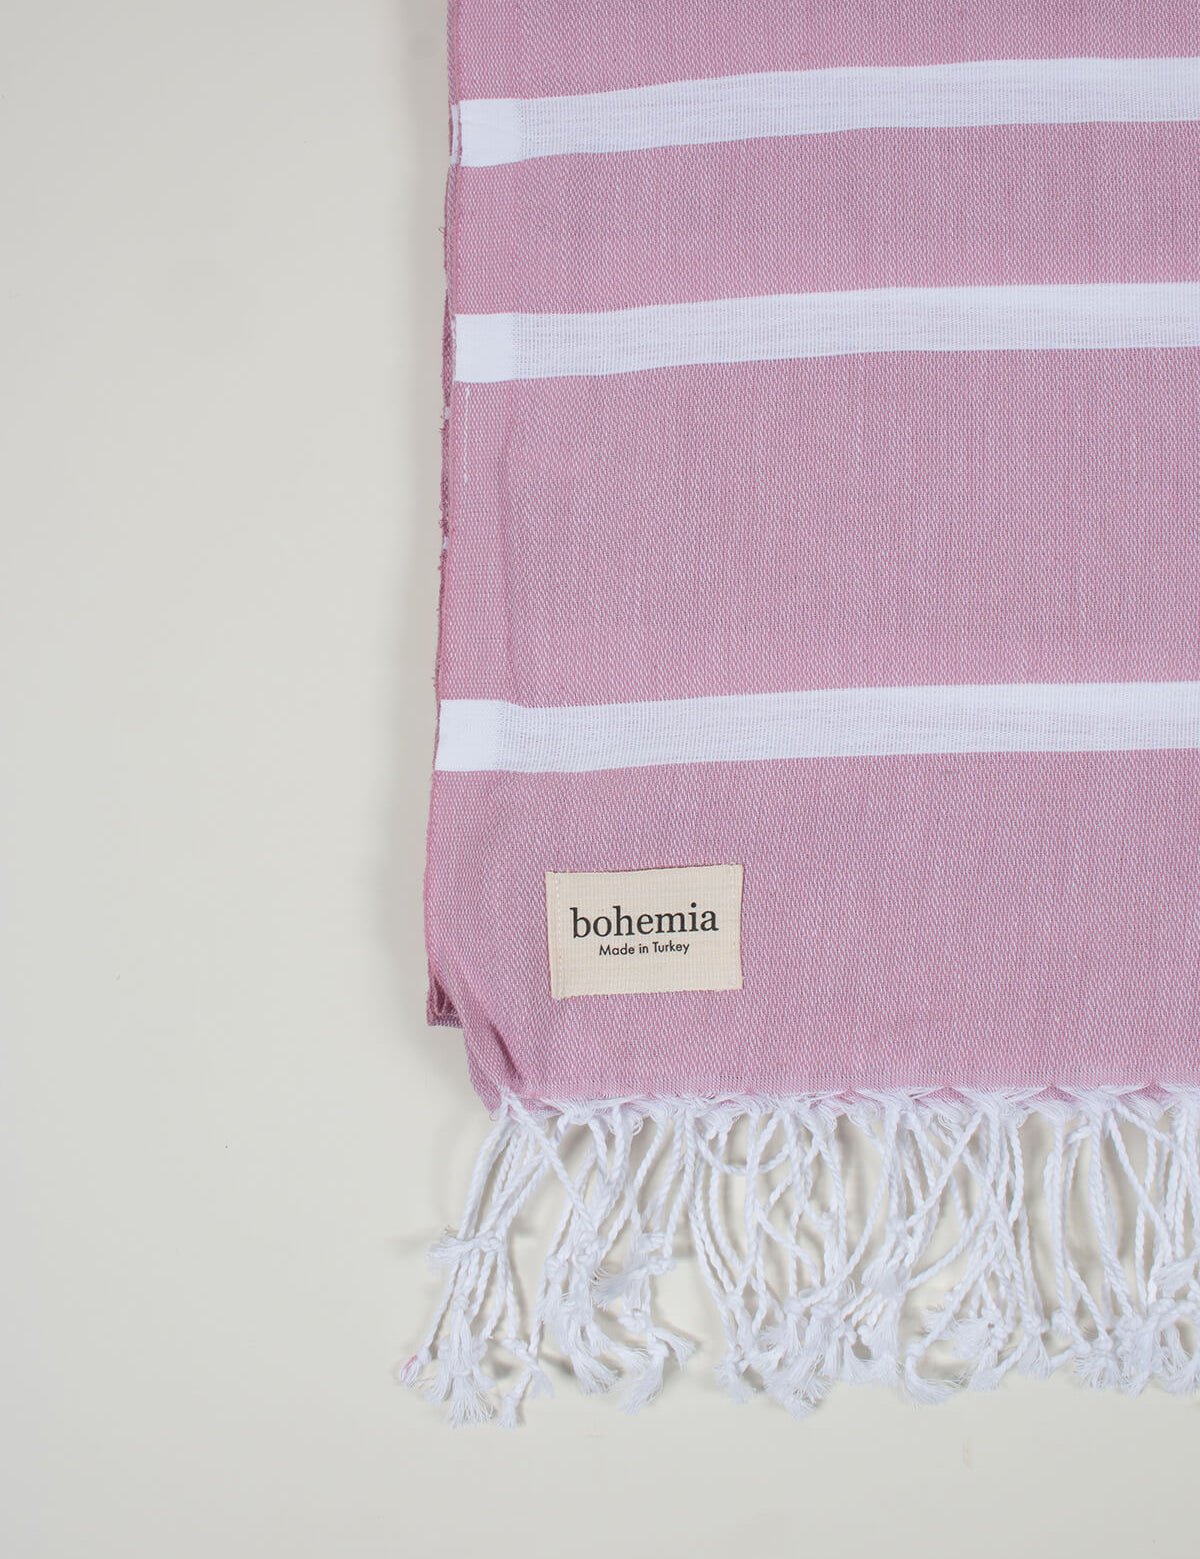 bohemia-design-ibiza-summer-hammam-towel-detail-vintage-pink.jpg